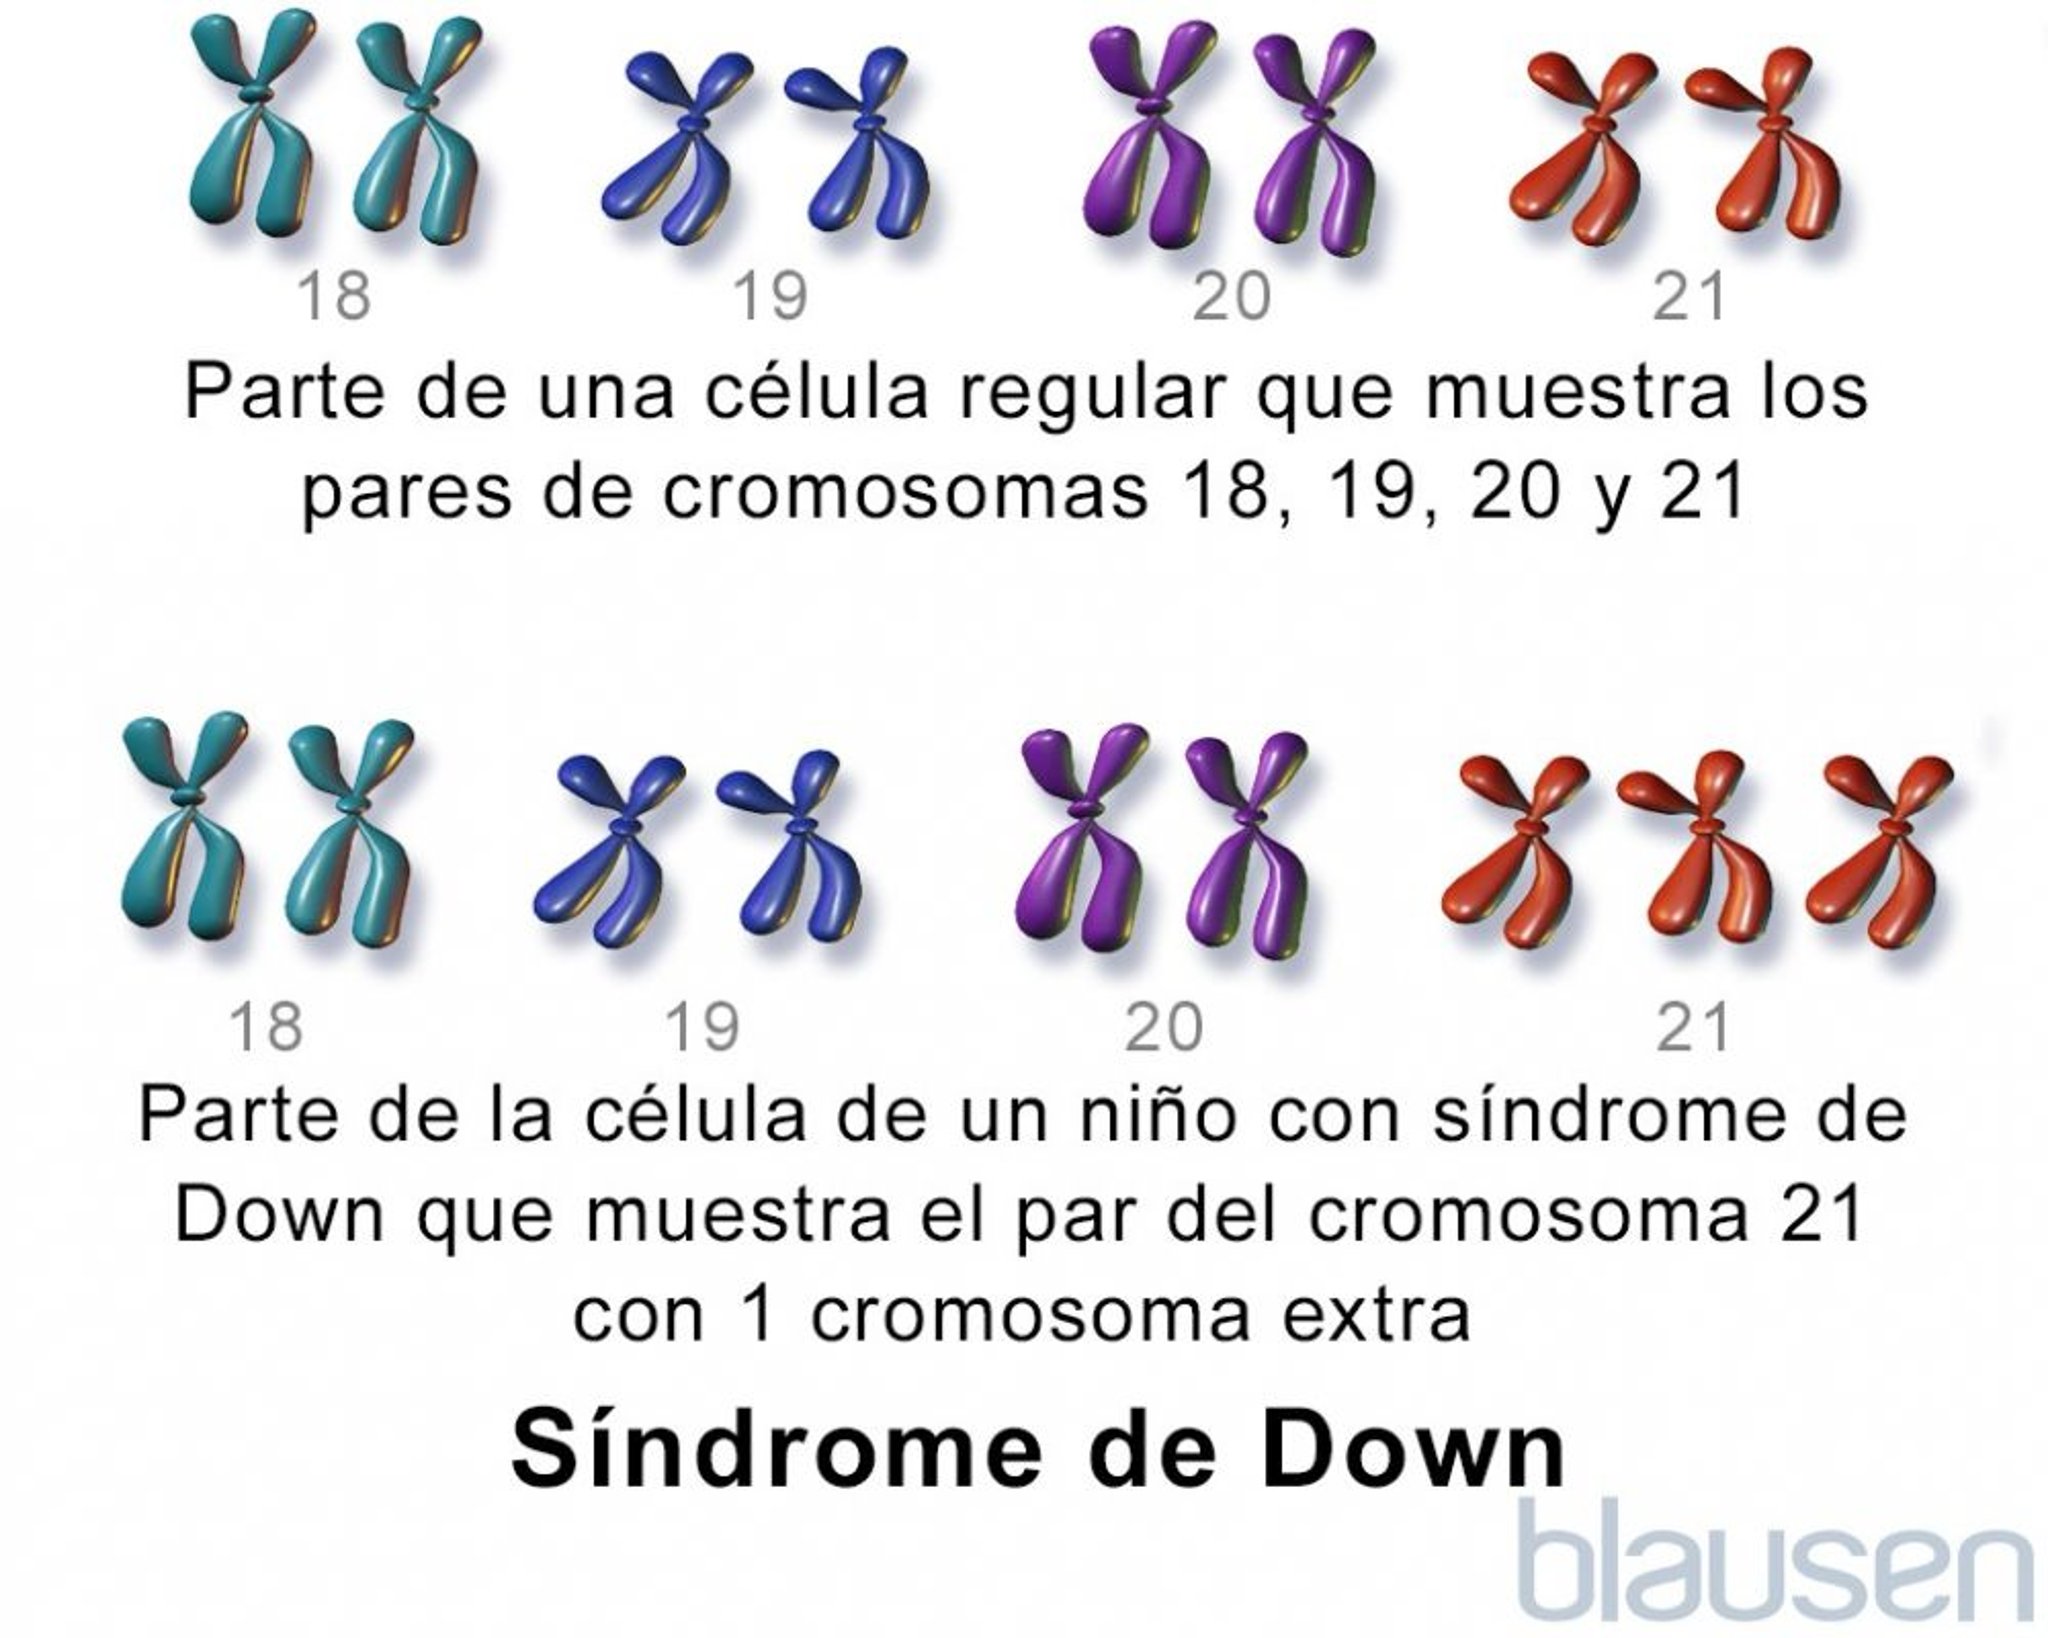 Síndrome de Down; trisomía 21